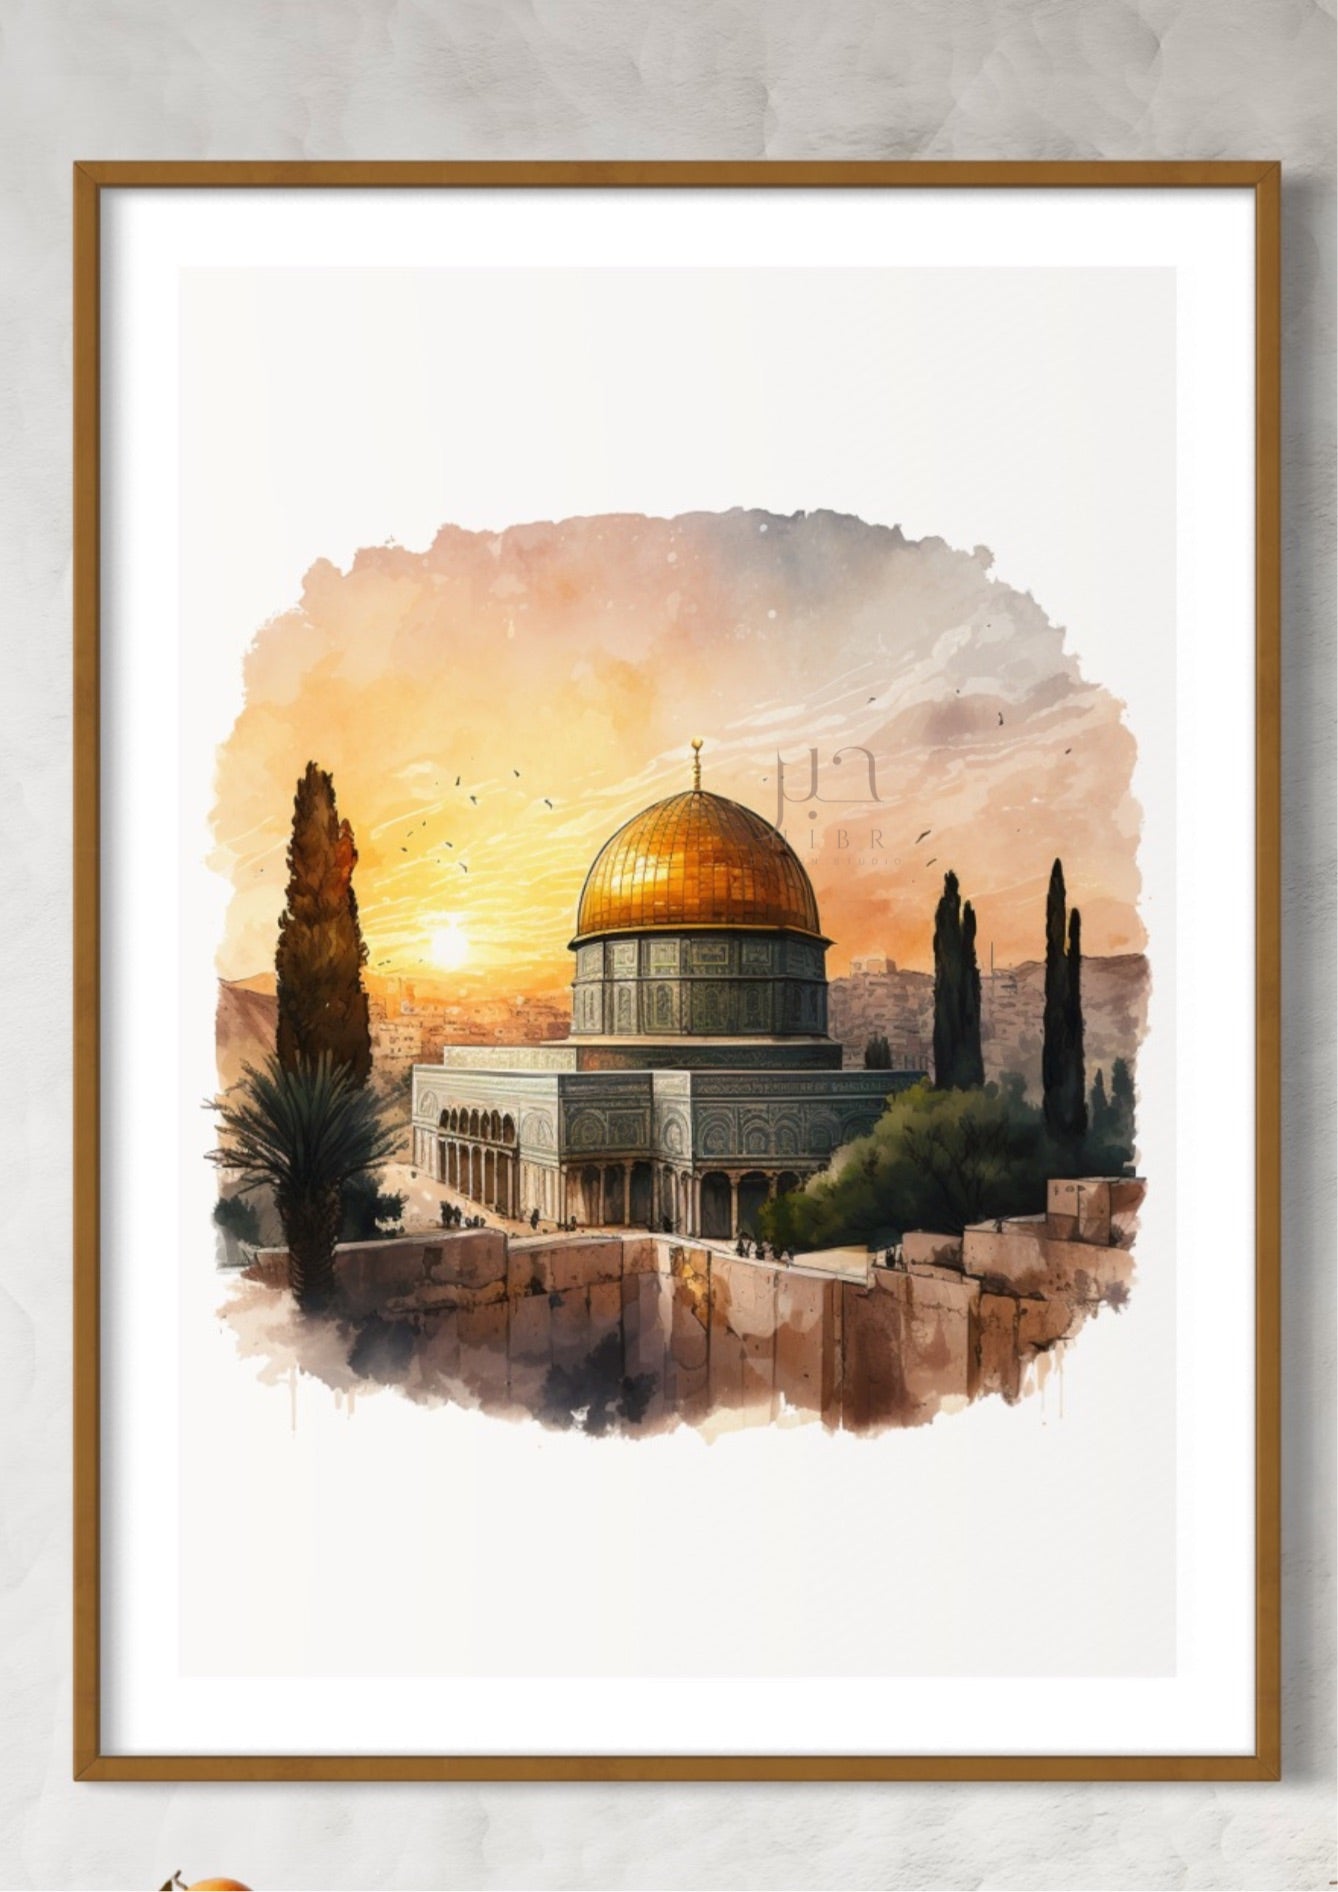 Flight of Faith: Masjid Al-Aqsa at Sunset